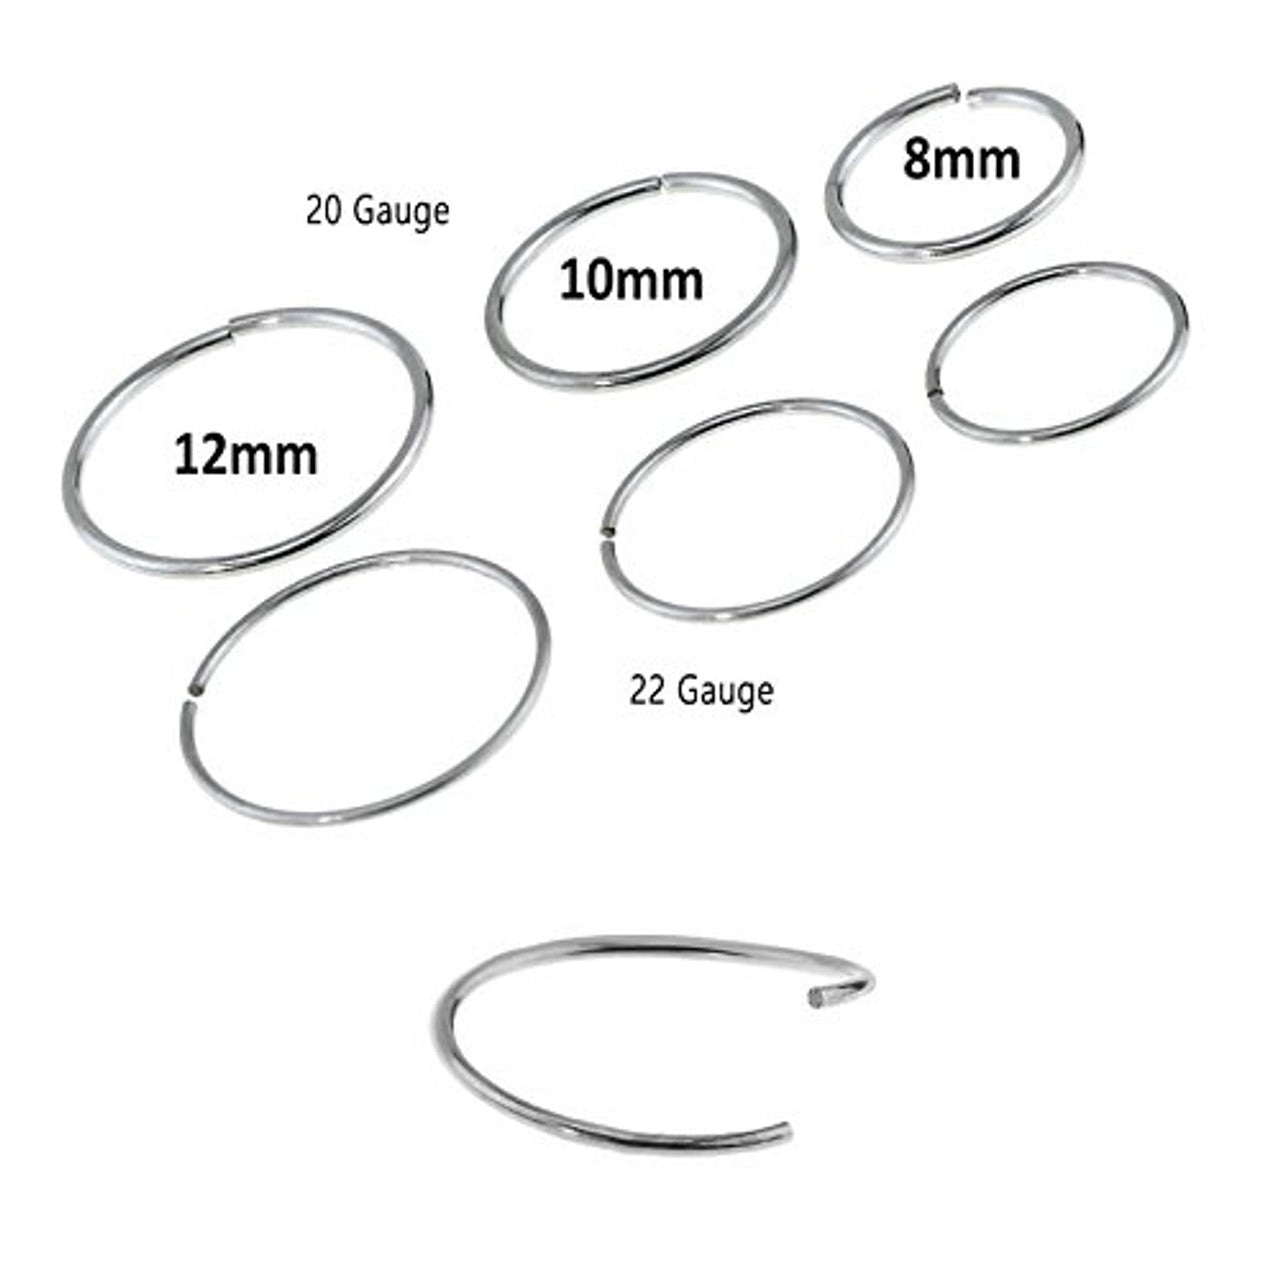 Surgical Steel Nose Hoop Ring 22 & 20 Gauge - Silver or Gold - 6 Pack